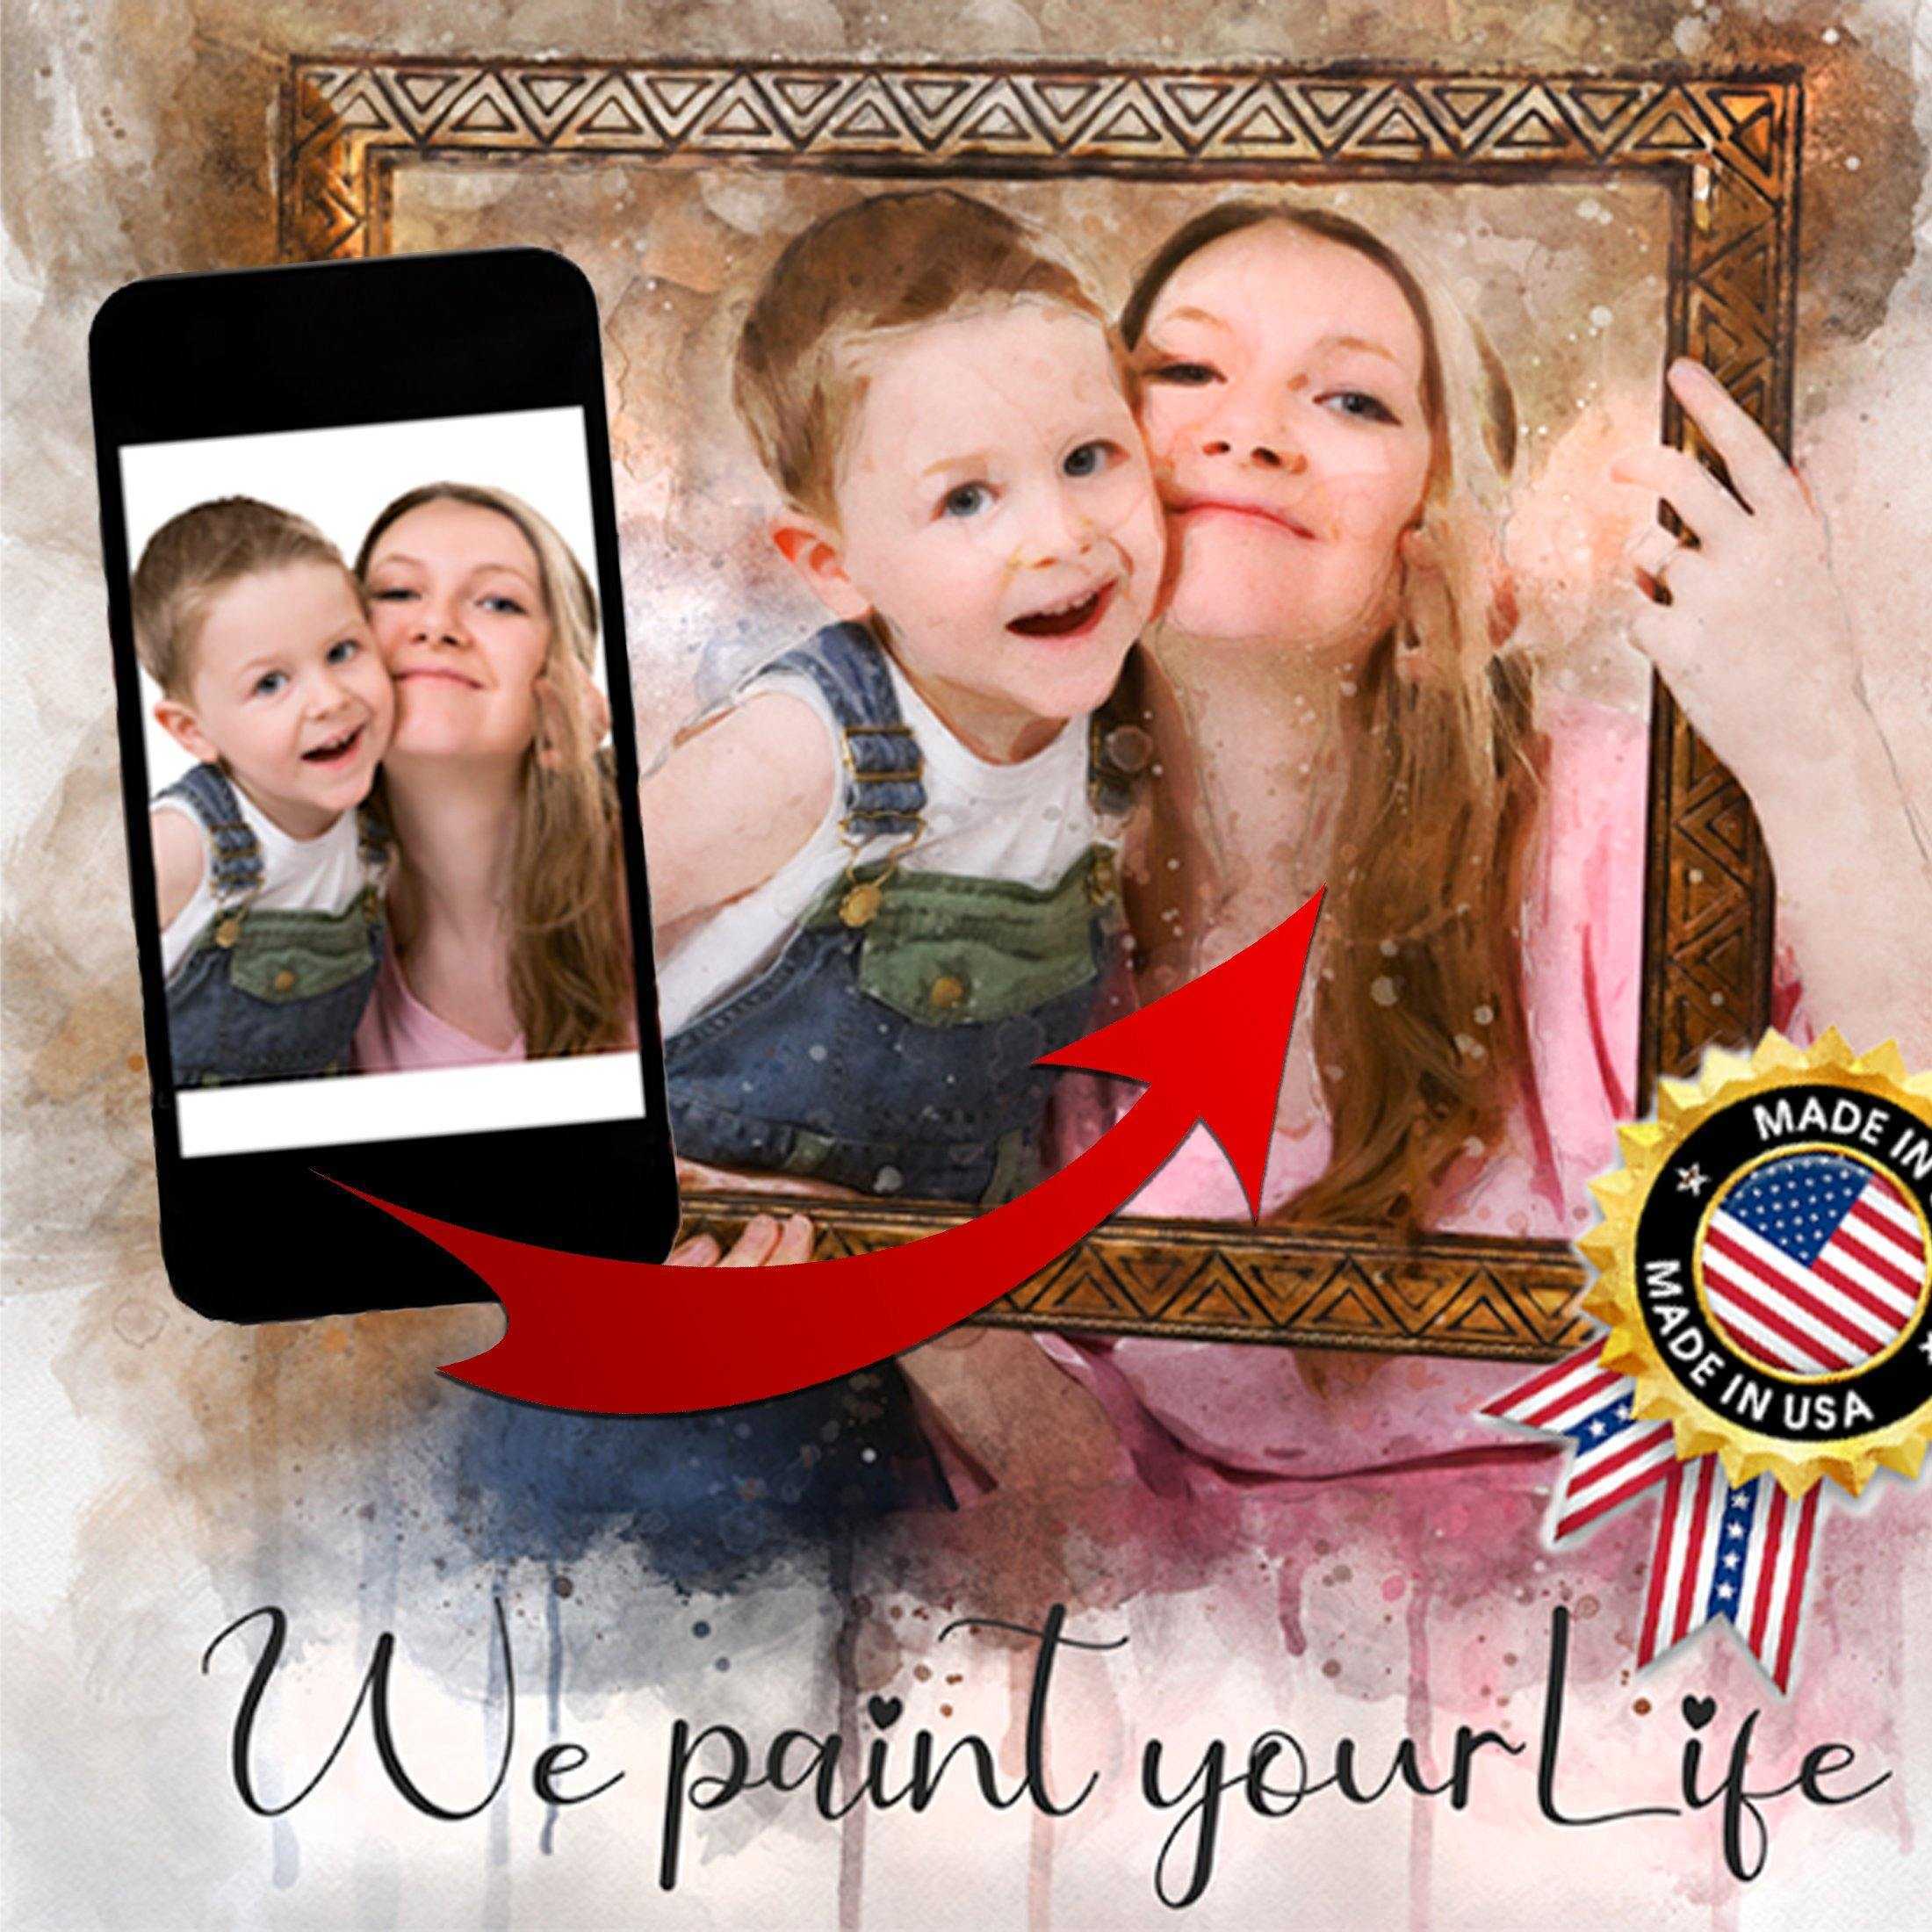 Turn Your Photo Into Custom Family Portrait